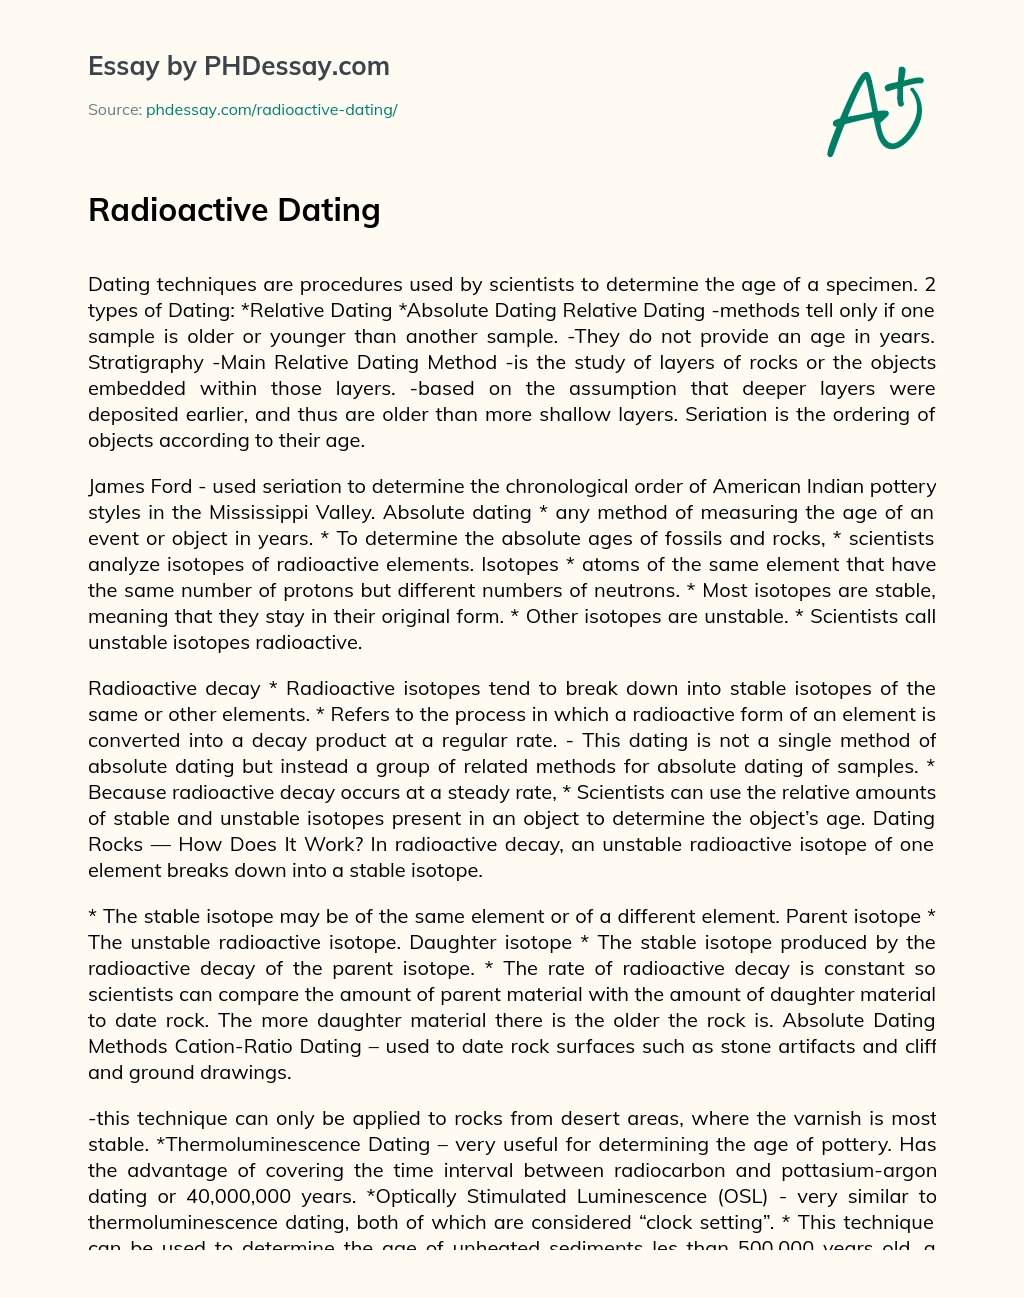 Radioactive Dating essay